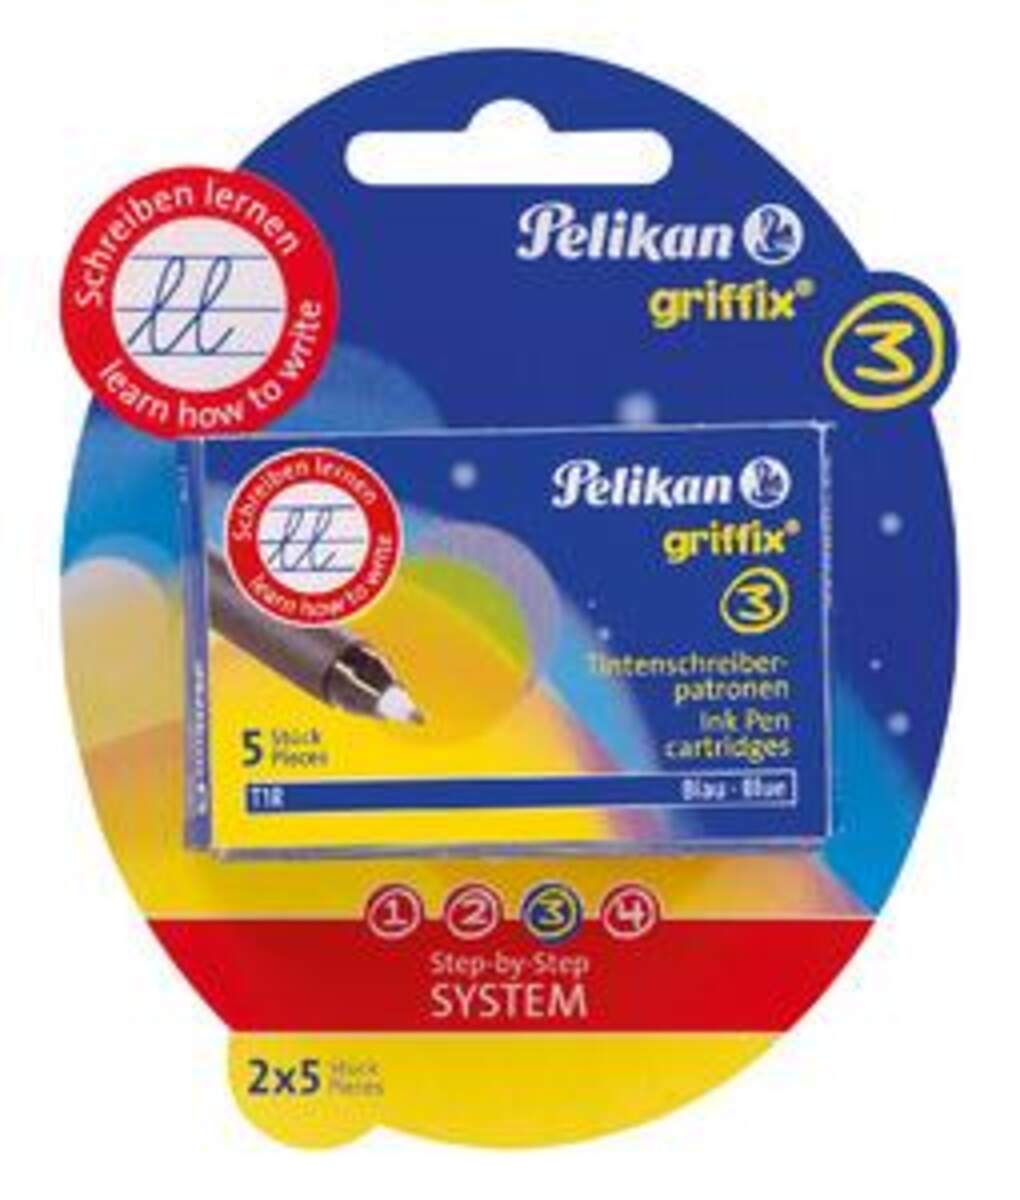 Pelikan Tintenschreiberpatronen griffix® Blisterverpackung mit 2 x 5 Tintenschreiber-Patronen Blau